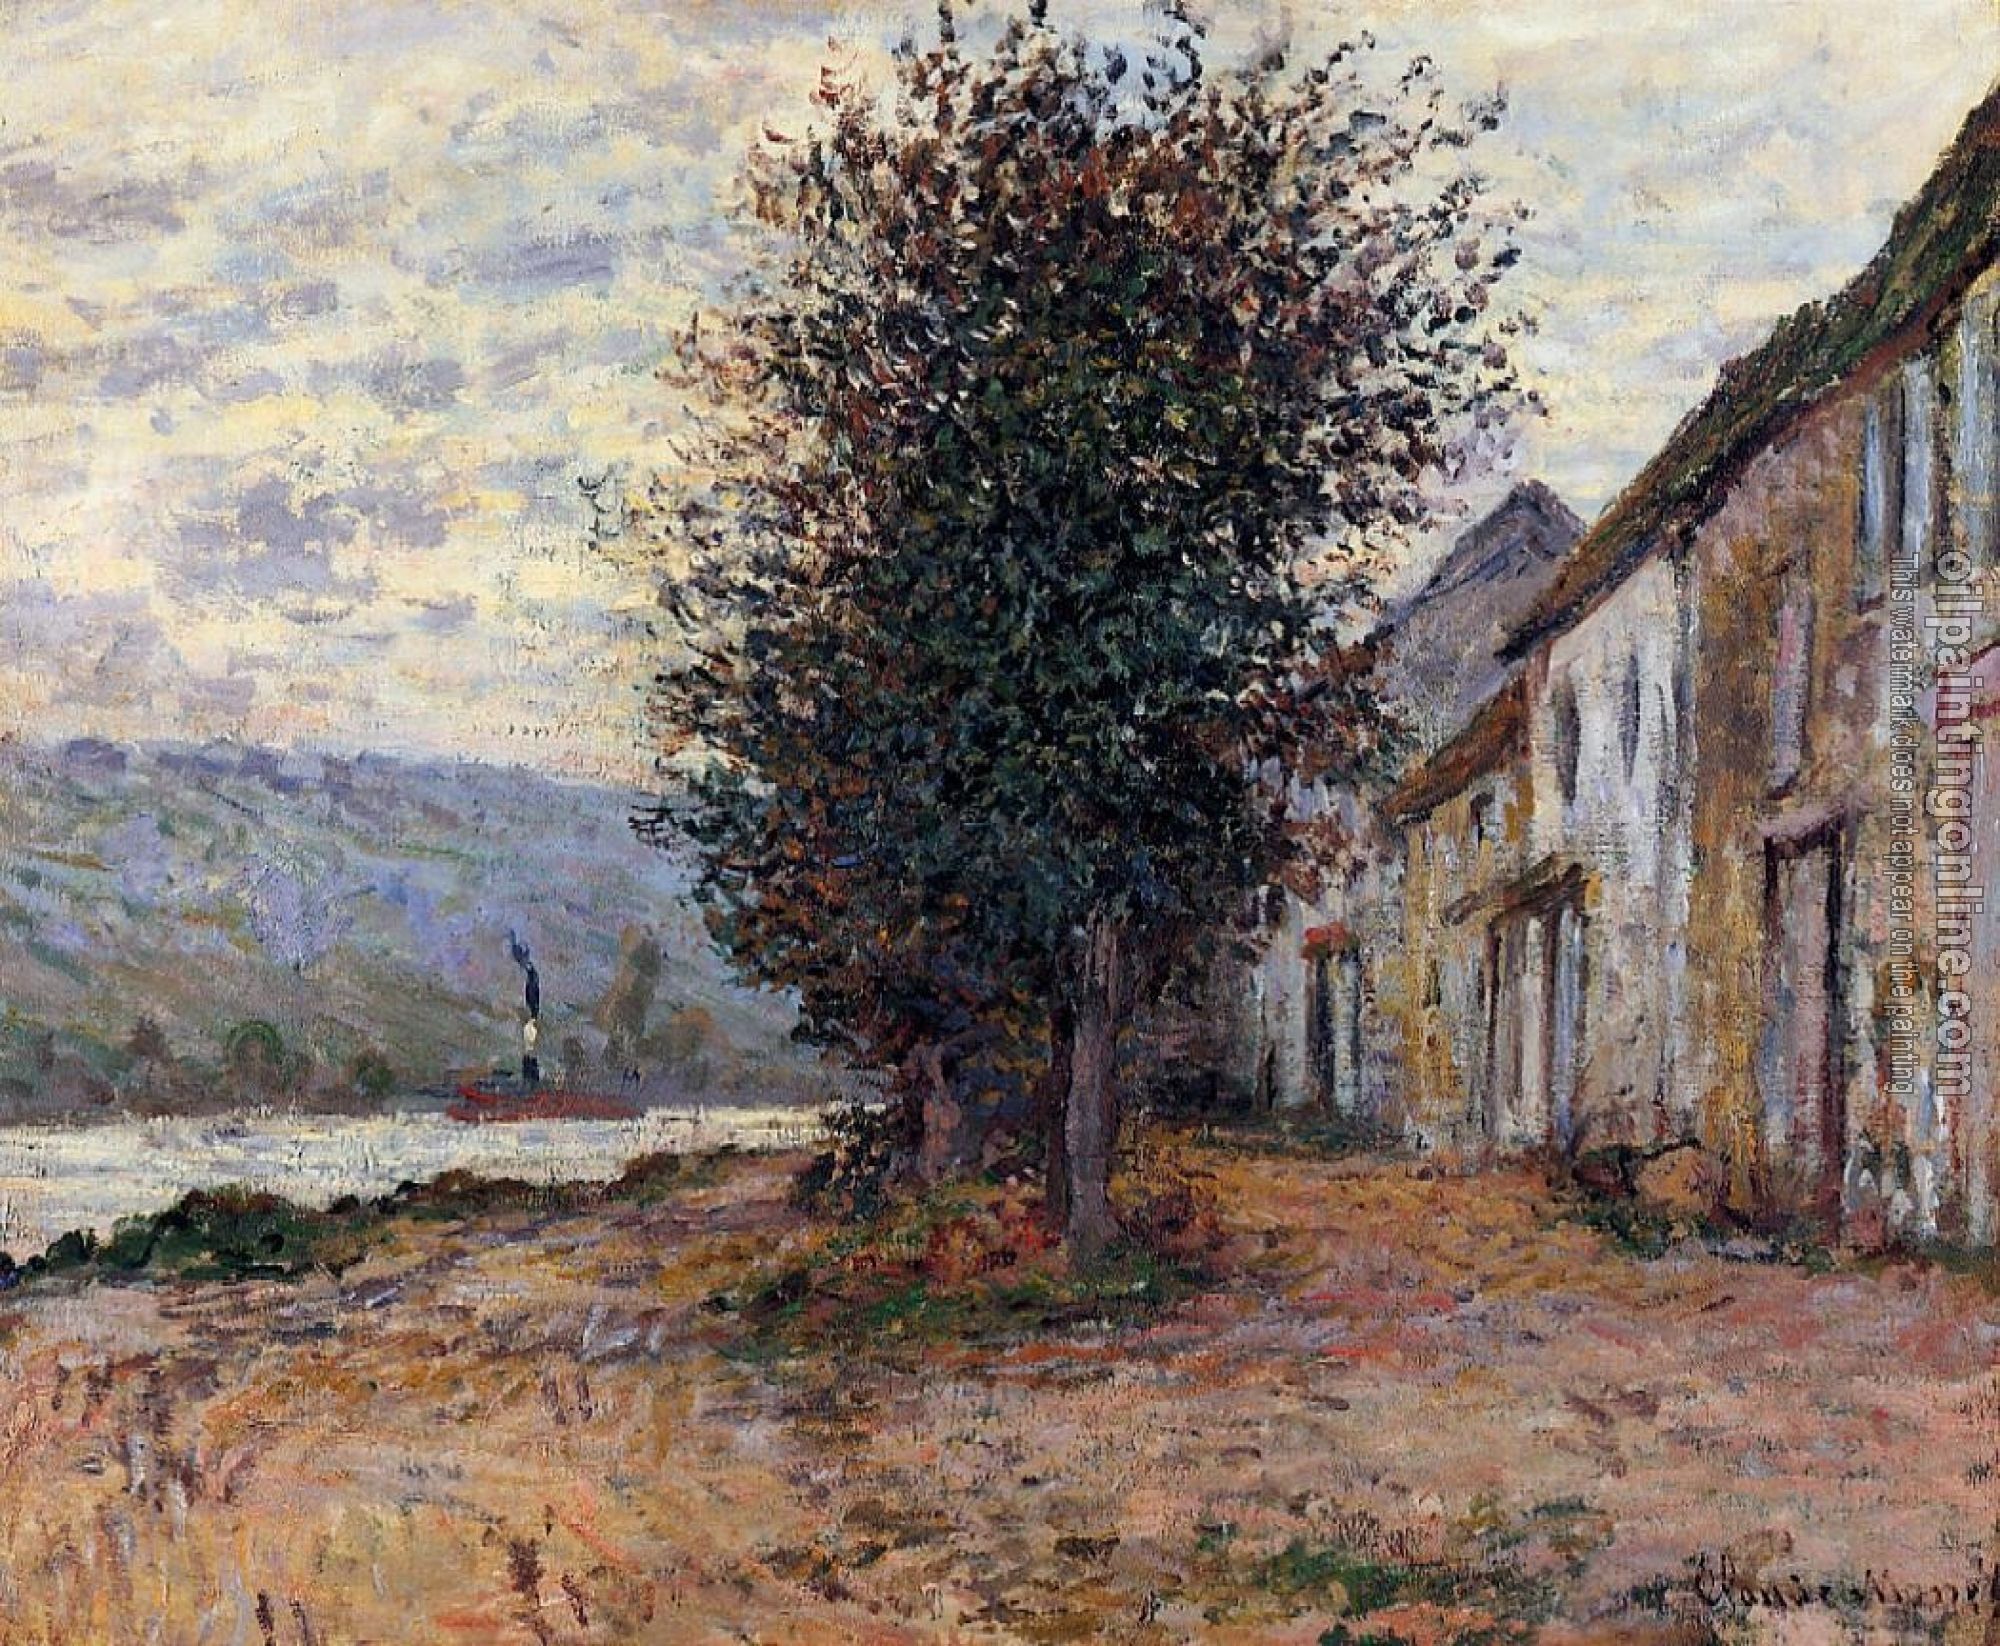 Monet, Claude Oscar - The Banks of the Seine